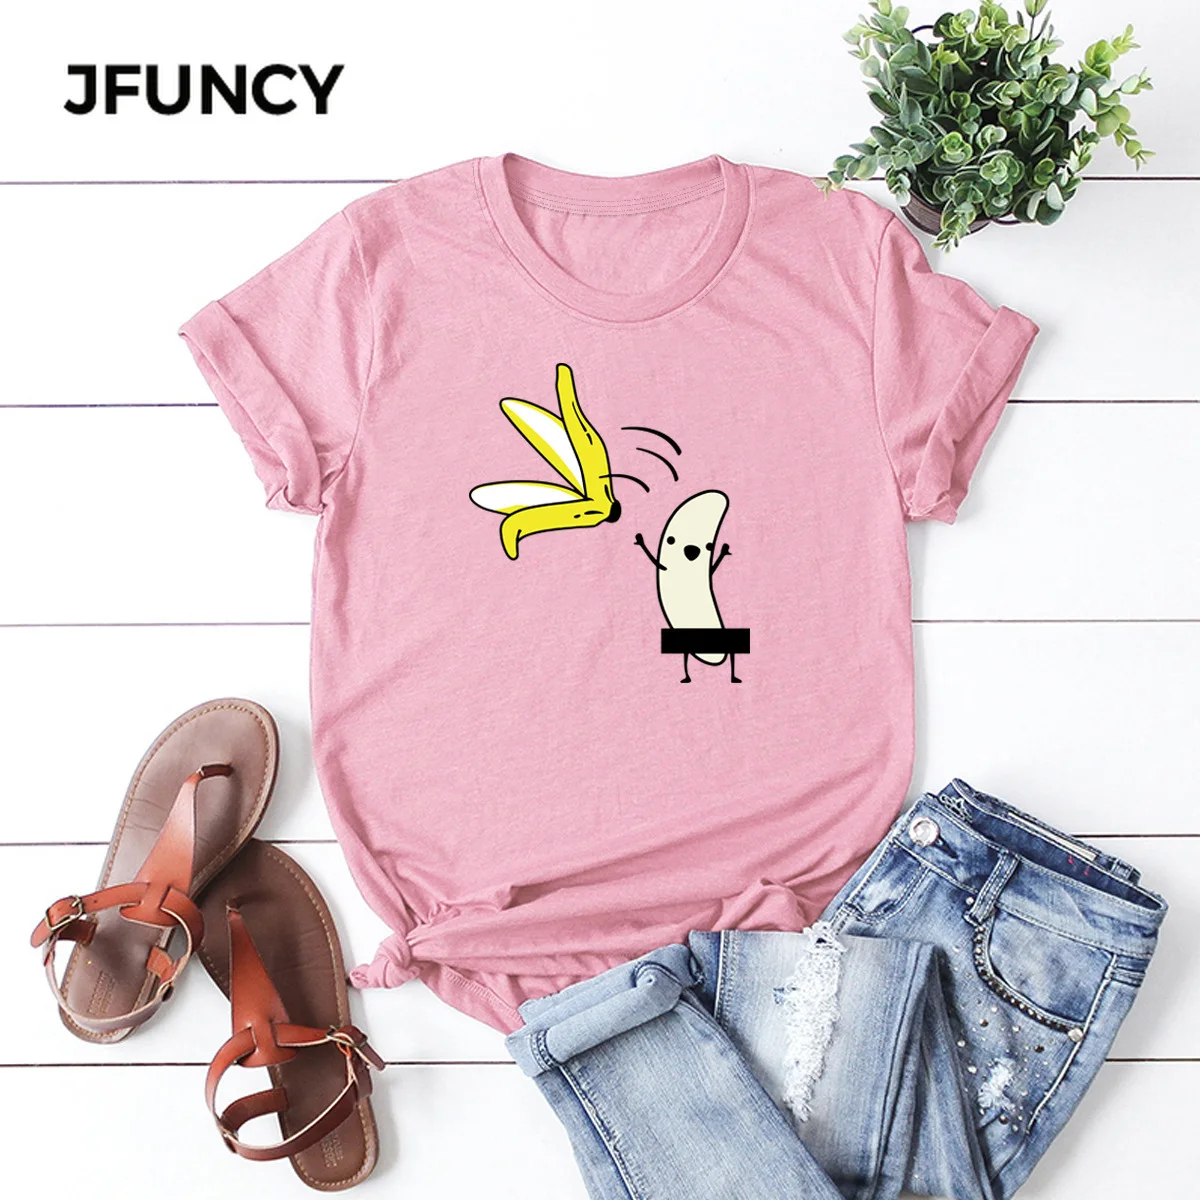 JFUNCY S-5XL T-Shirt Funny Banana Peeling Himself Print T Shirt Women Cotton Short Sleeve Summer Tee Tops Casual Shirt